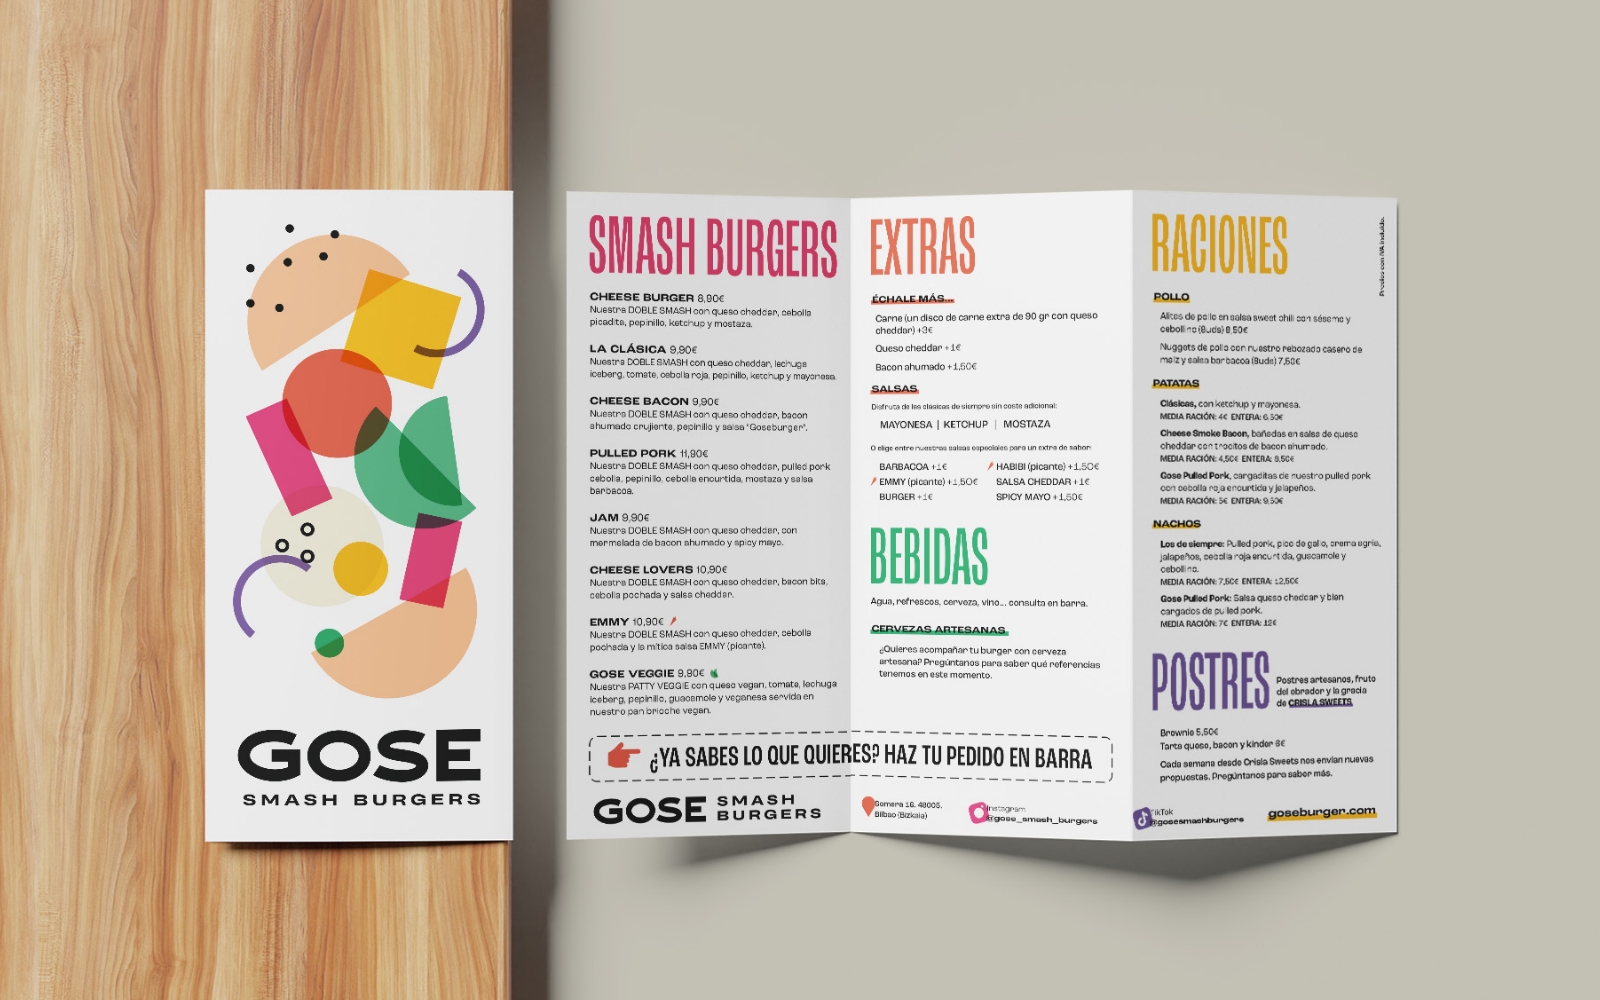 GOSE Smash Burgers by Crisiscreativa - Creative Work - $i